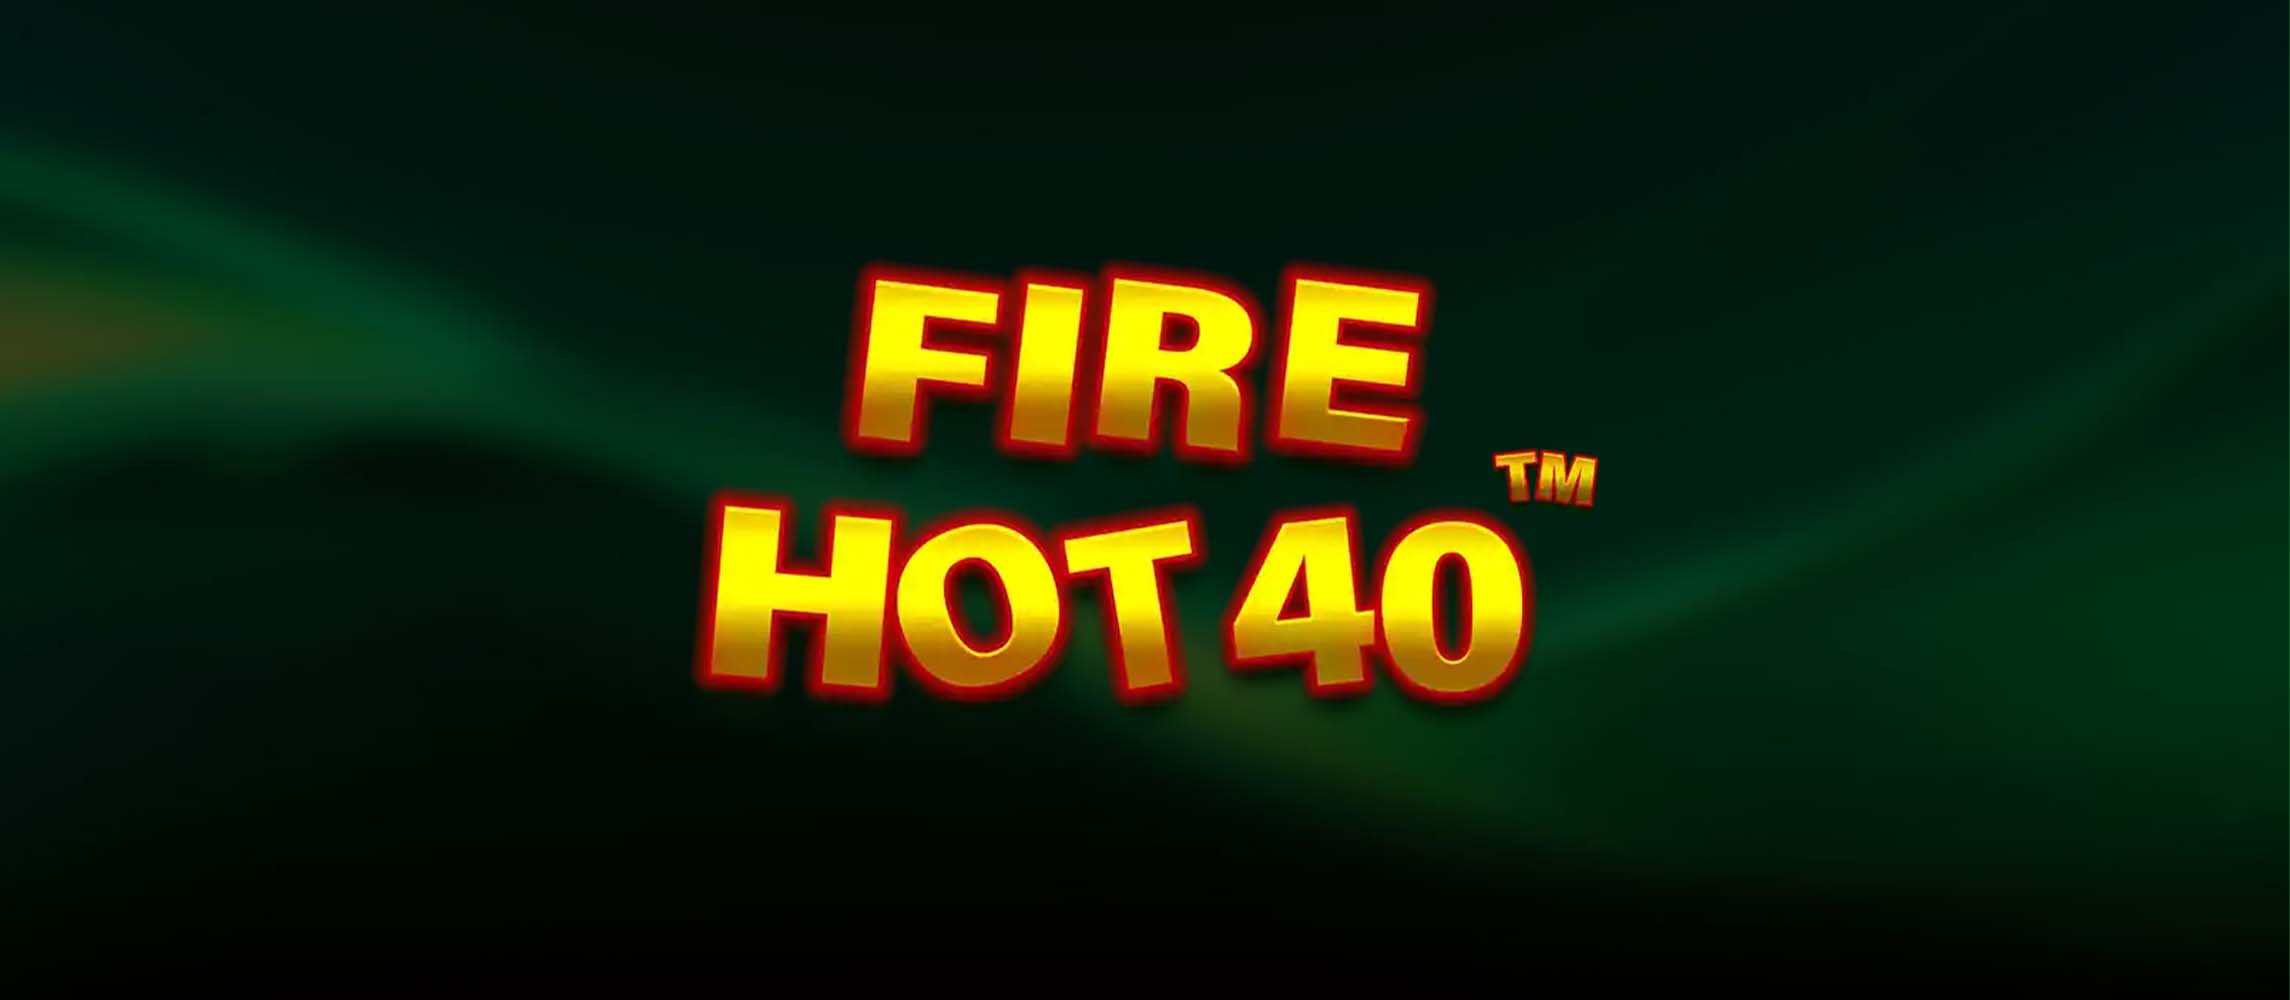 Fire Hot 40 by Pragmatic Play